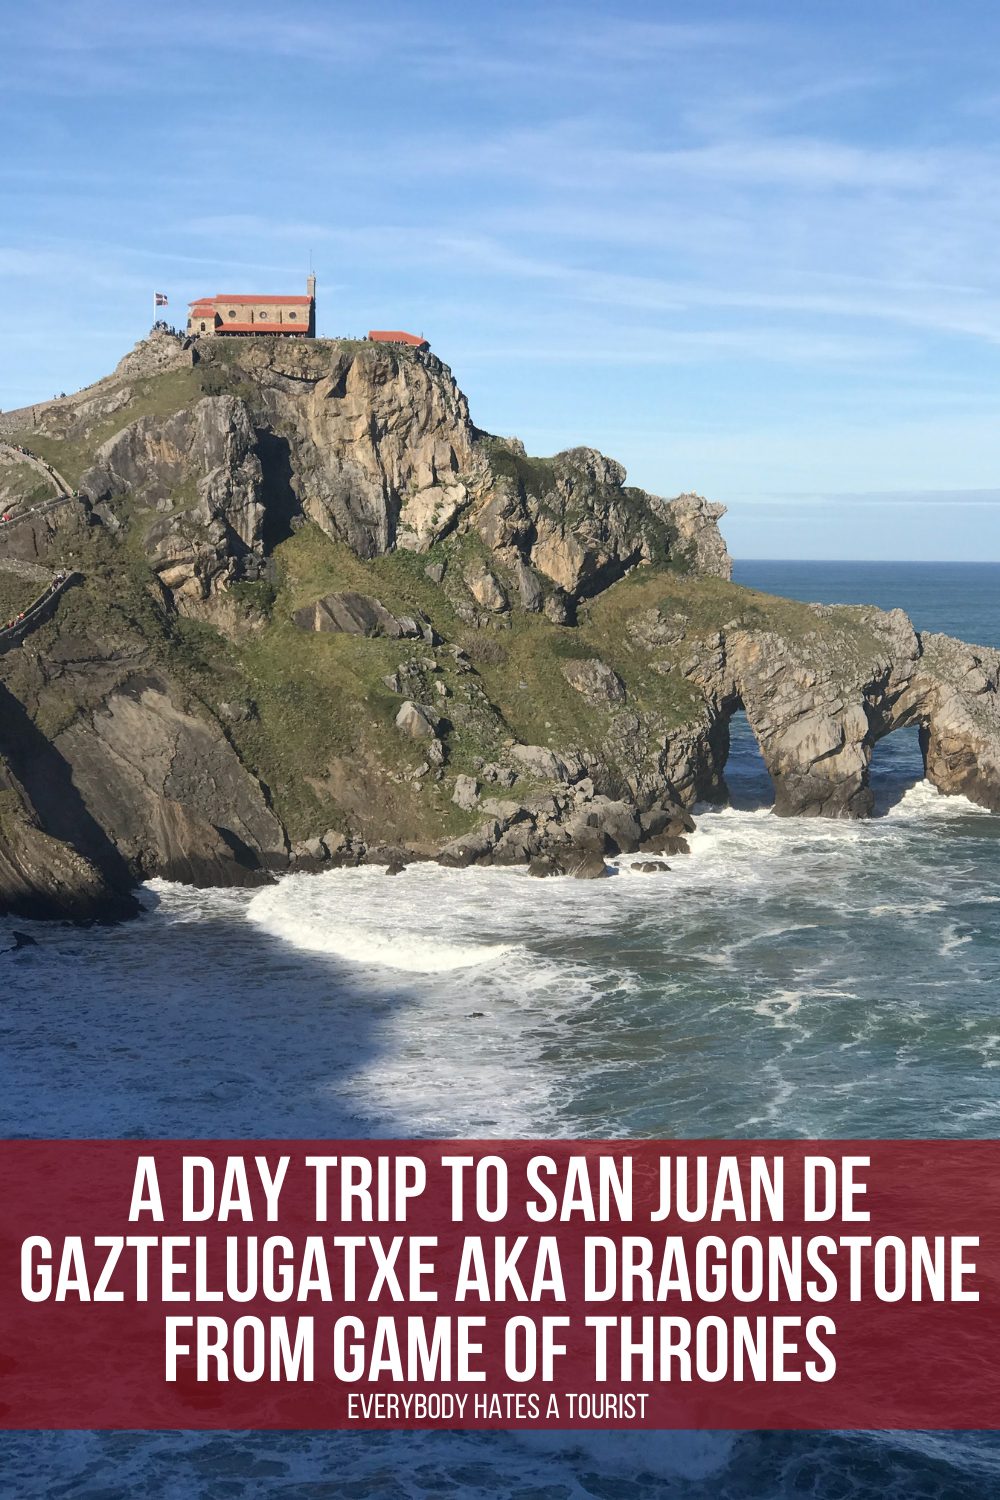 a day trip to san juan de gaztelugatxe aka dragonstone from game of thrones - A Day Trip to San Juan de Gaztelugatxe AKA Dragonstone from Game of Thrones